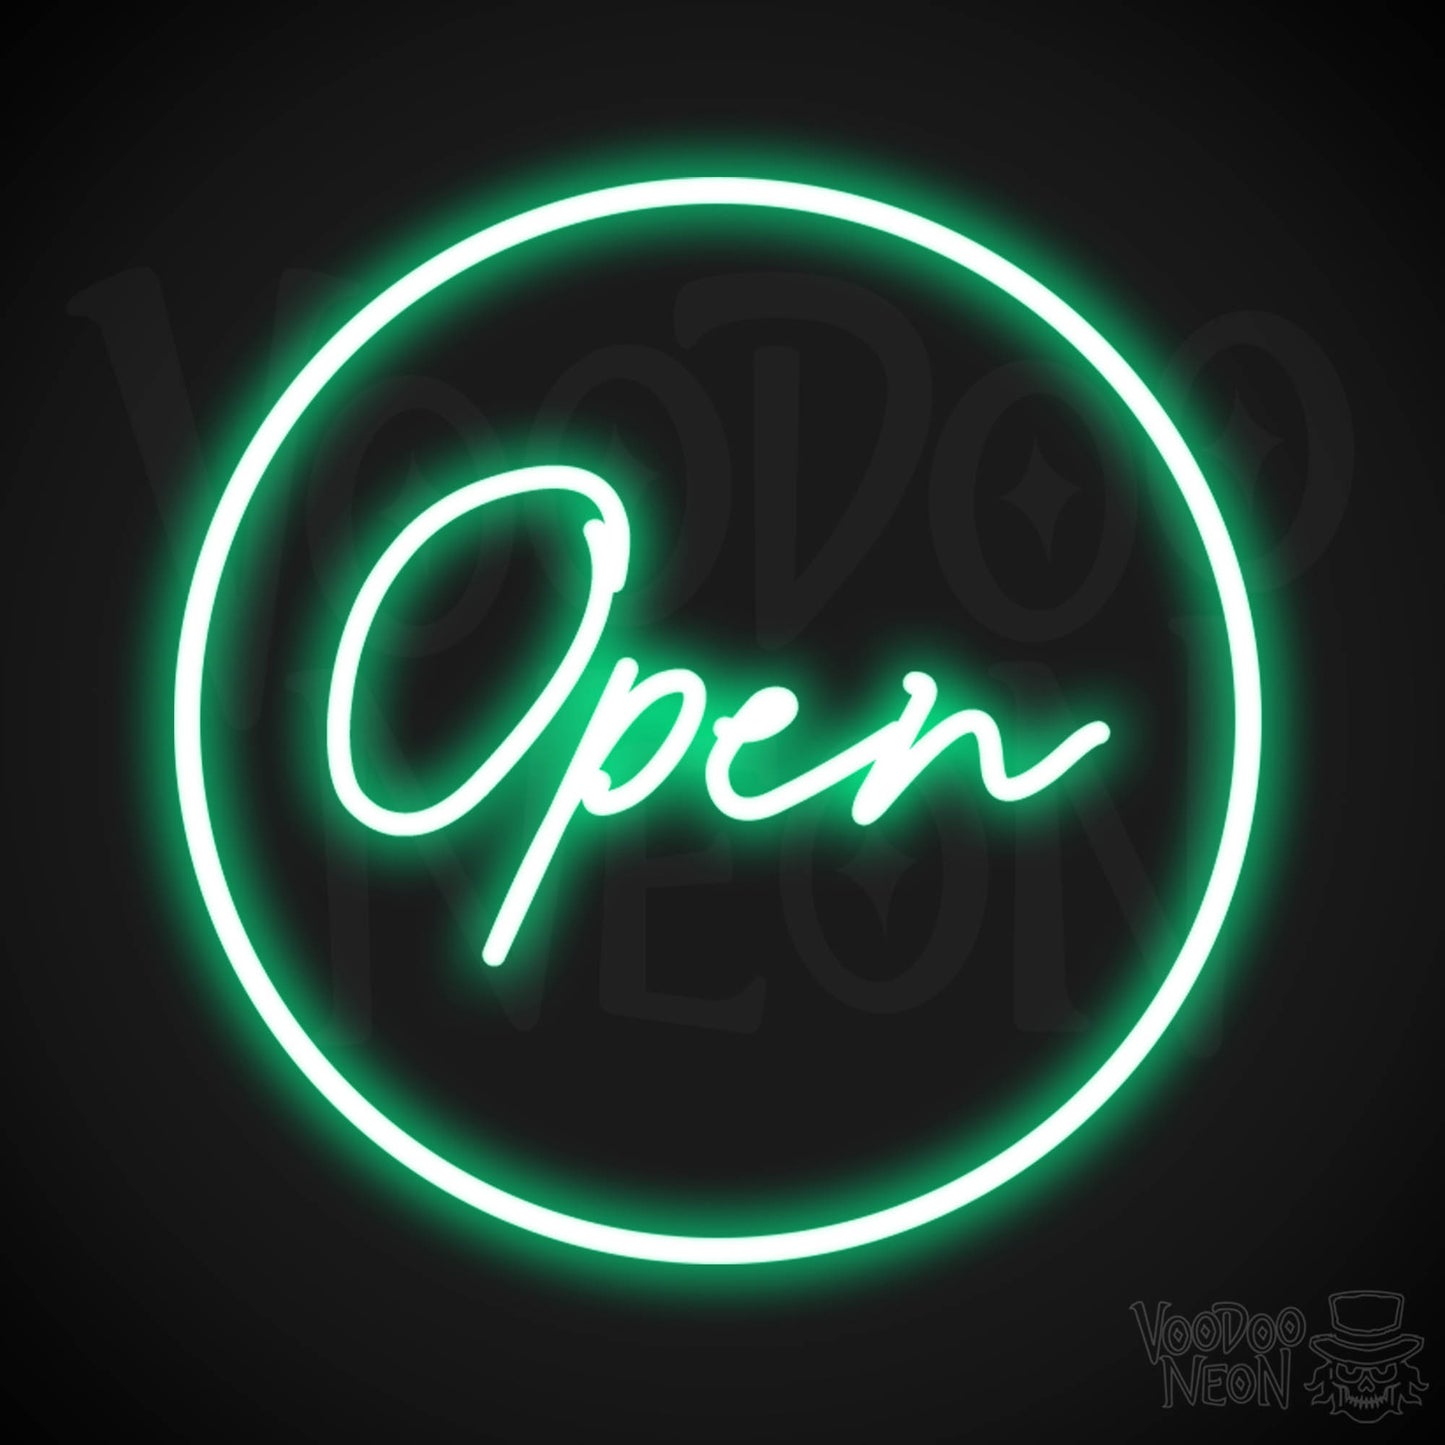 Open LED Neon - Green